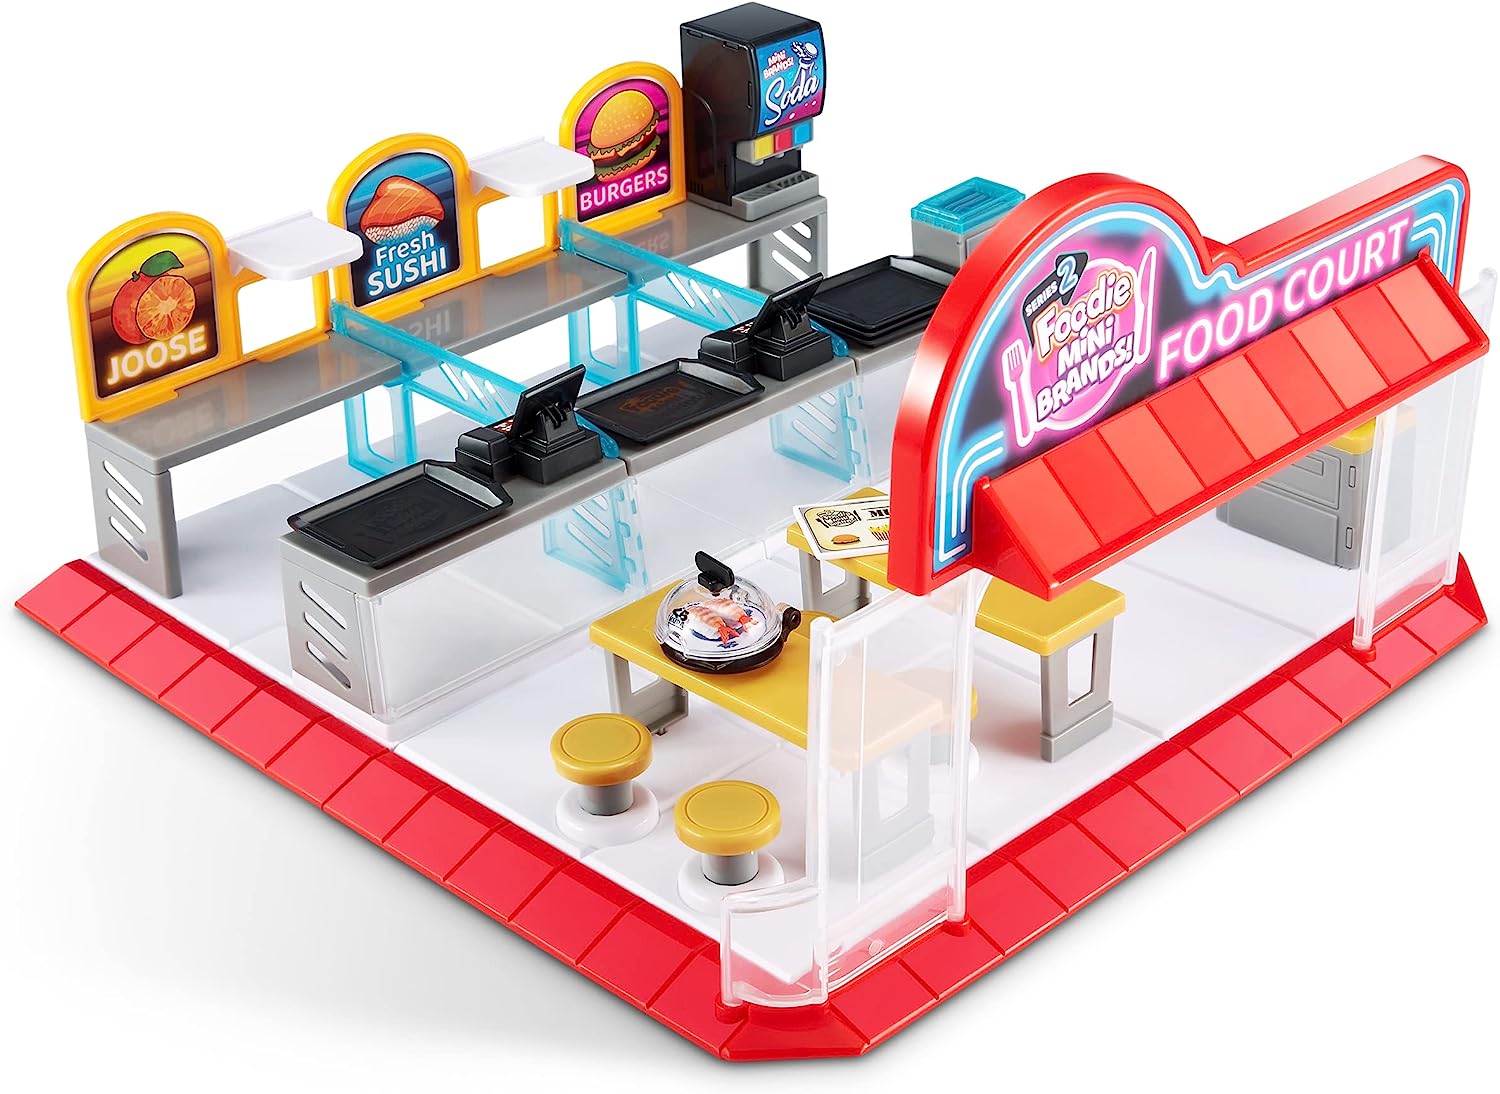 5 Surprise Foodie Mini Brands Series 2 toys 